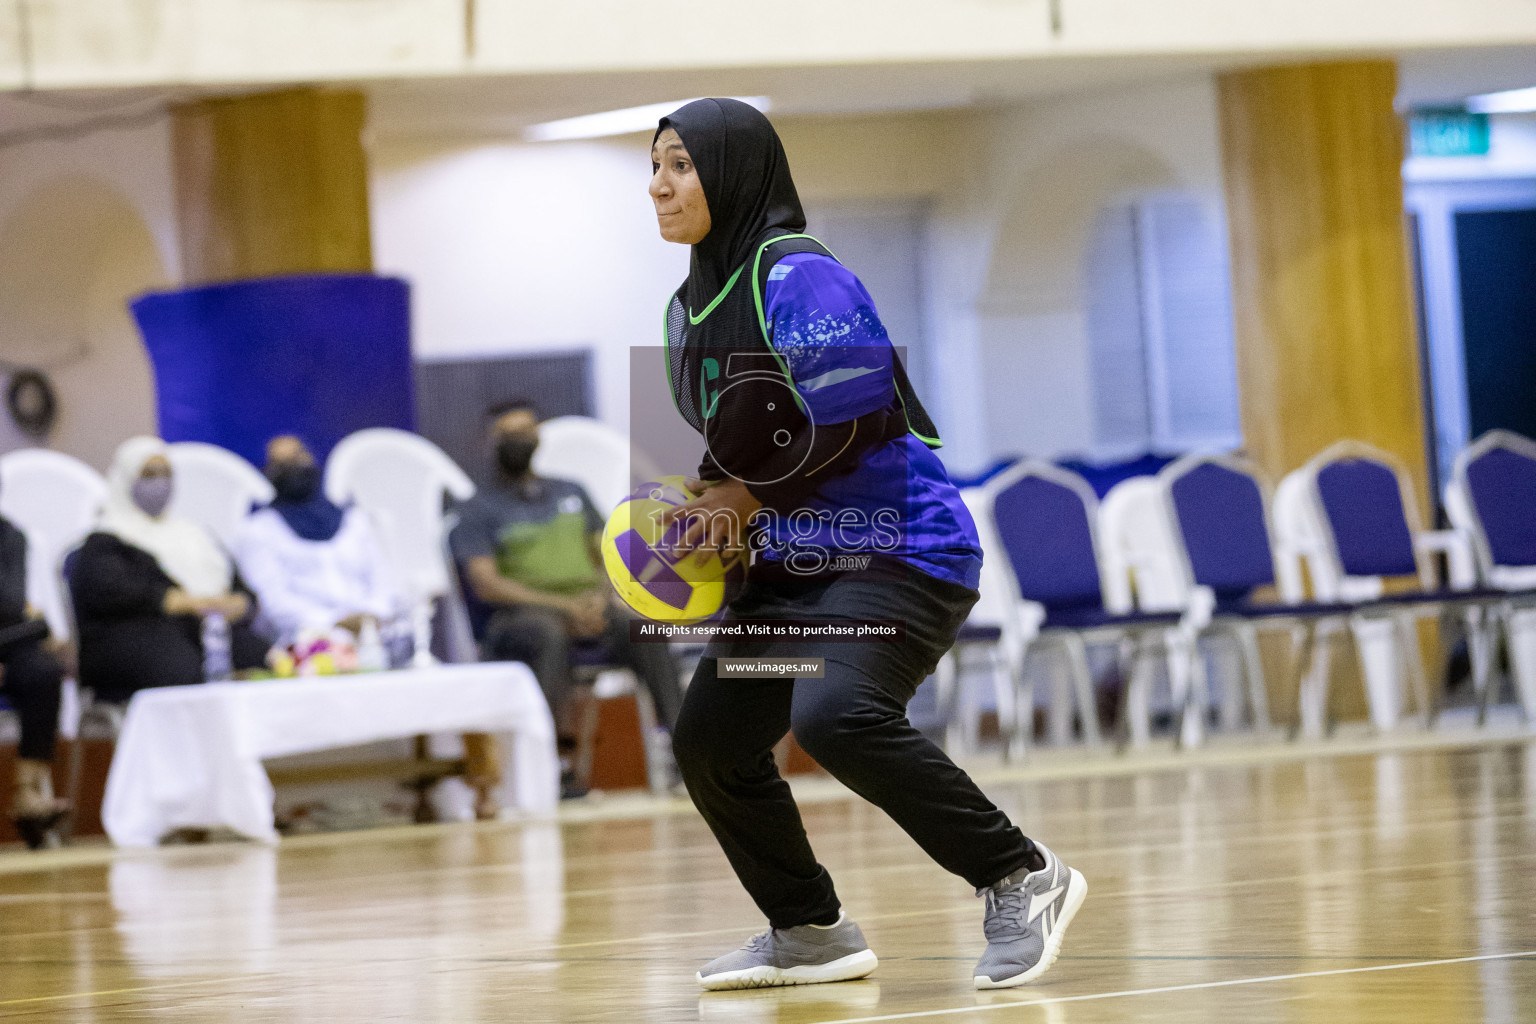 Milo National Netball Tournament 28 November 2021 at Social Center Indoor Court, Male, Maldives. Photos: Shuu / Images Mv